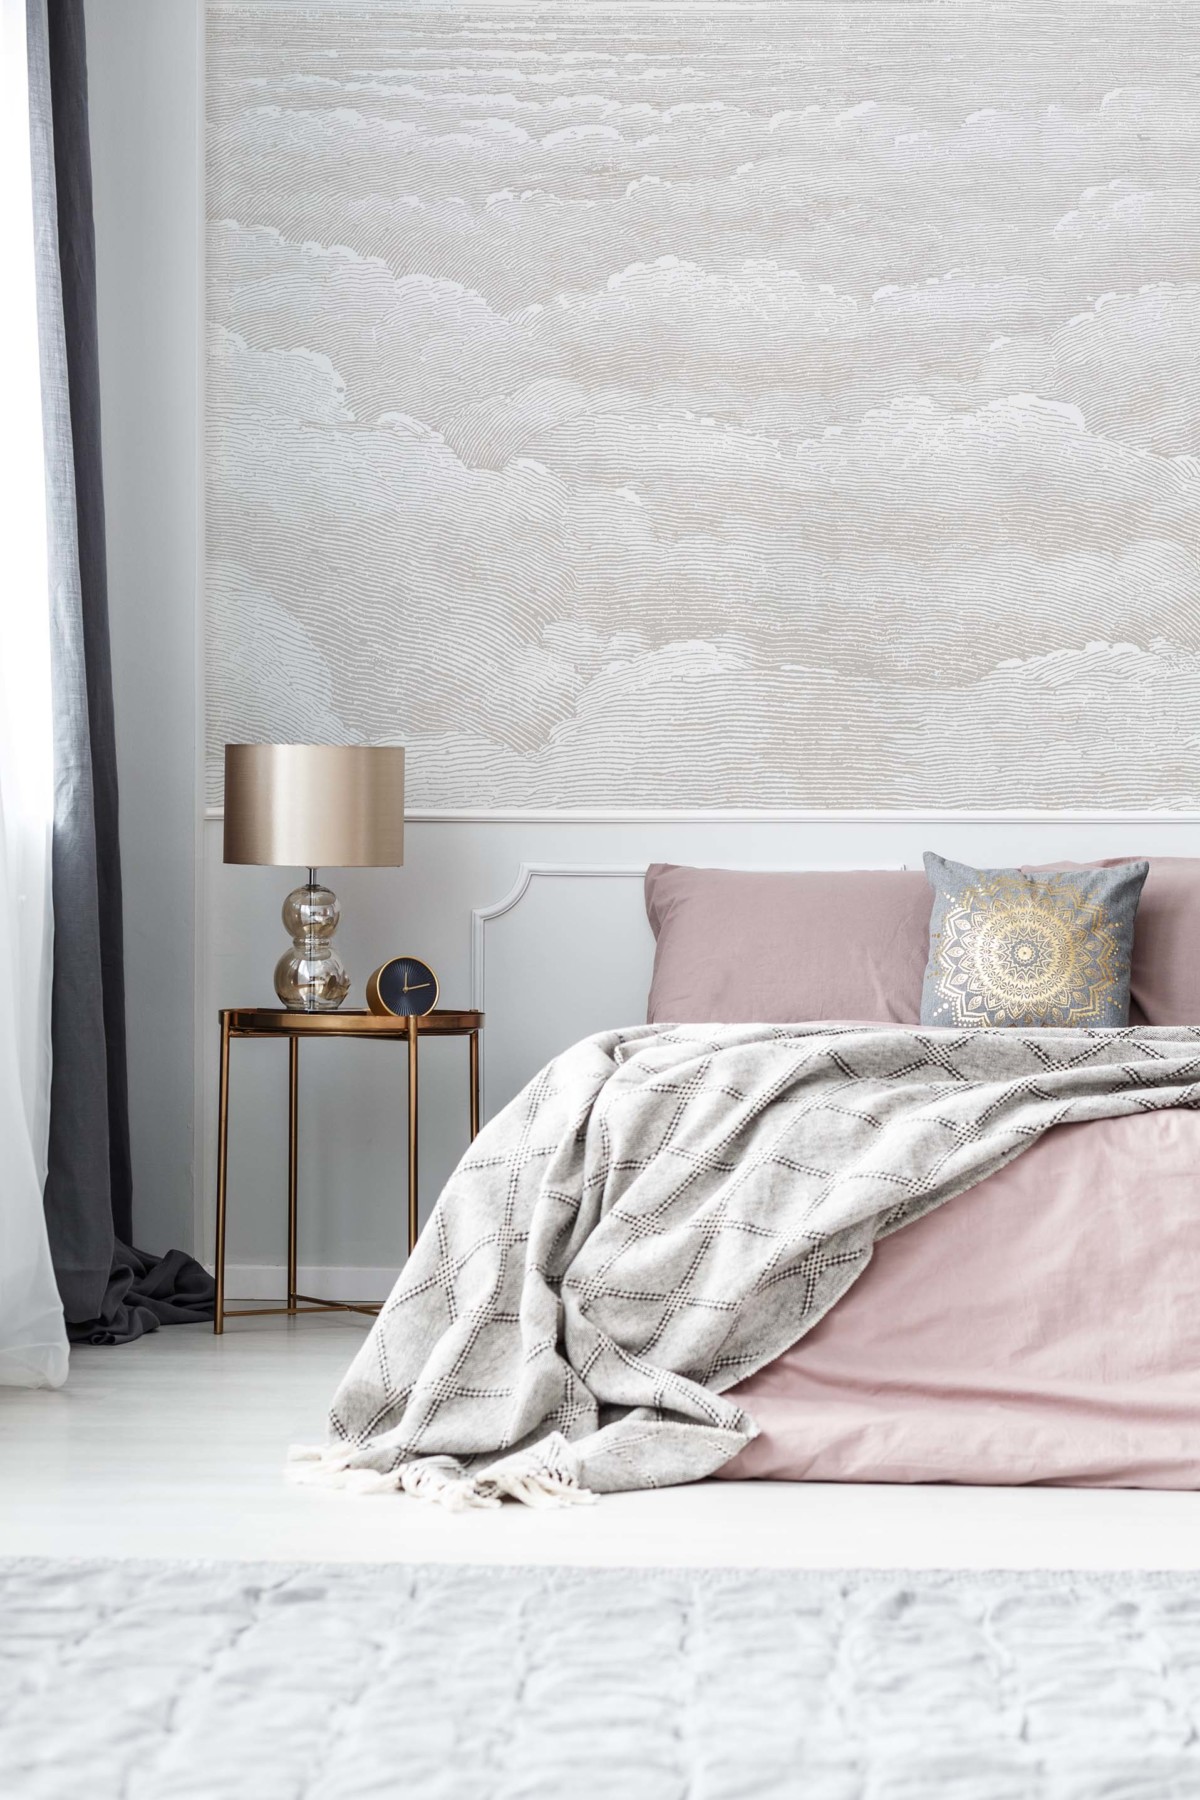 Etched Clouds - Warm Grey Wallpaper | Grafico Melbourne